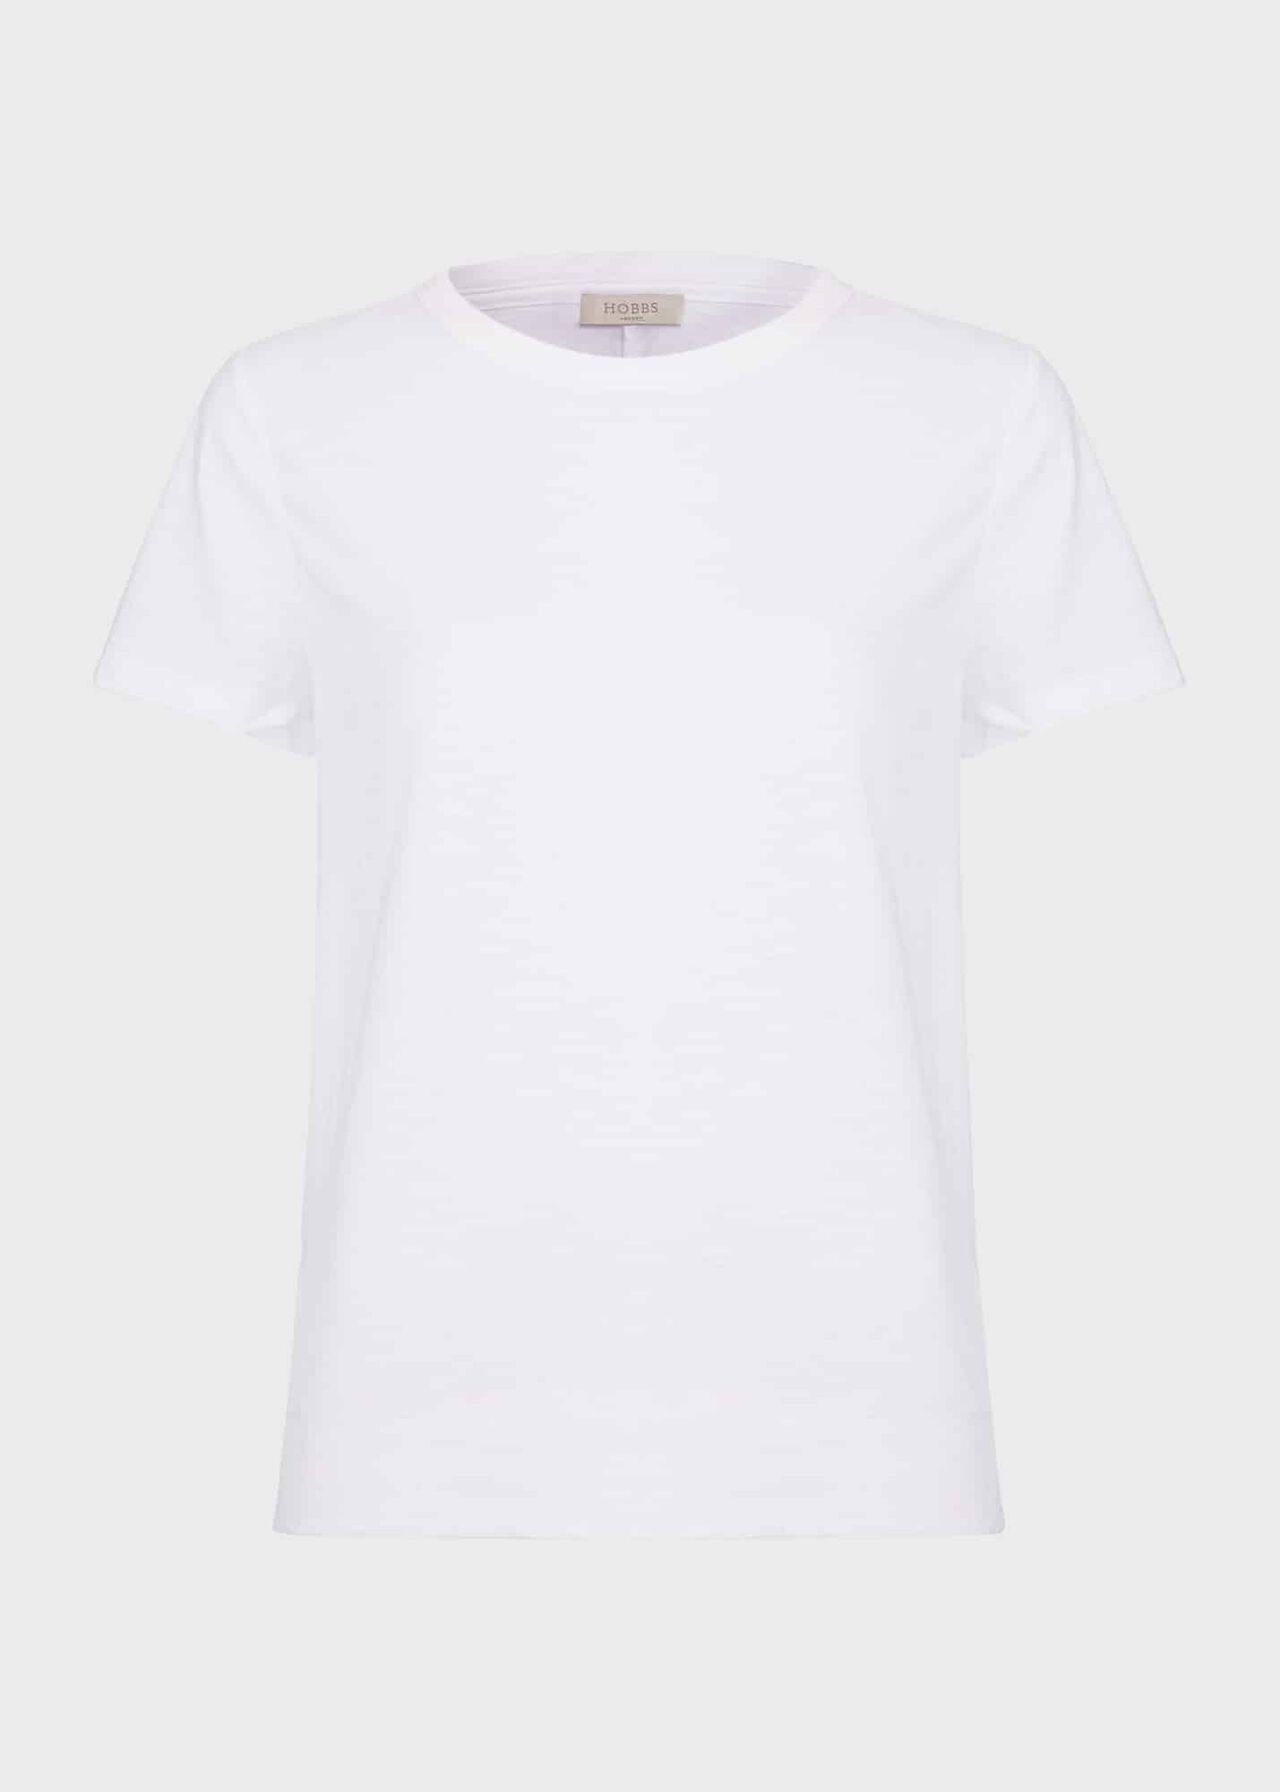 Adaline Cotton Slub T-Shirt, White, hi-res